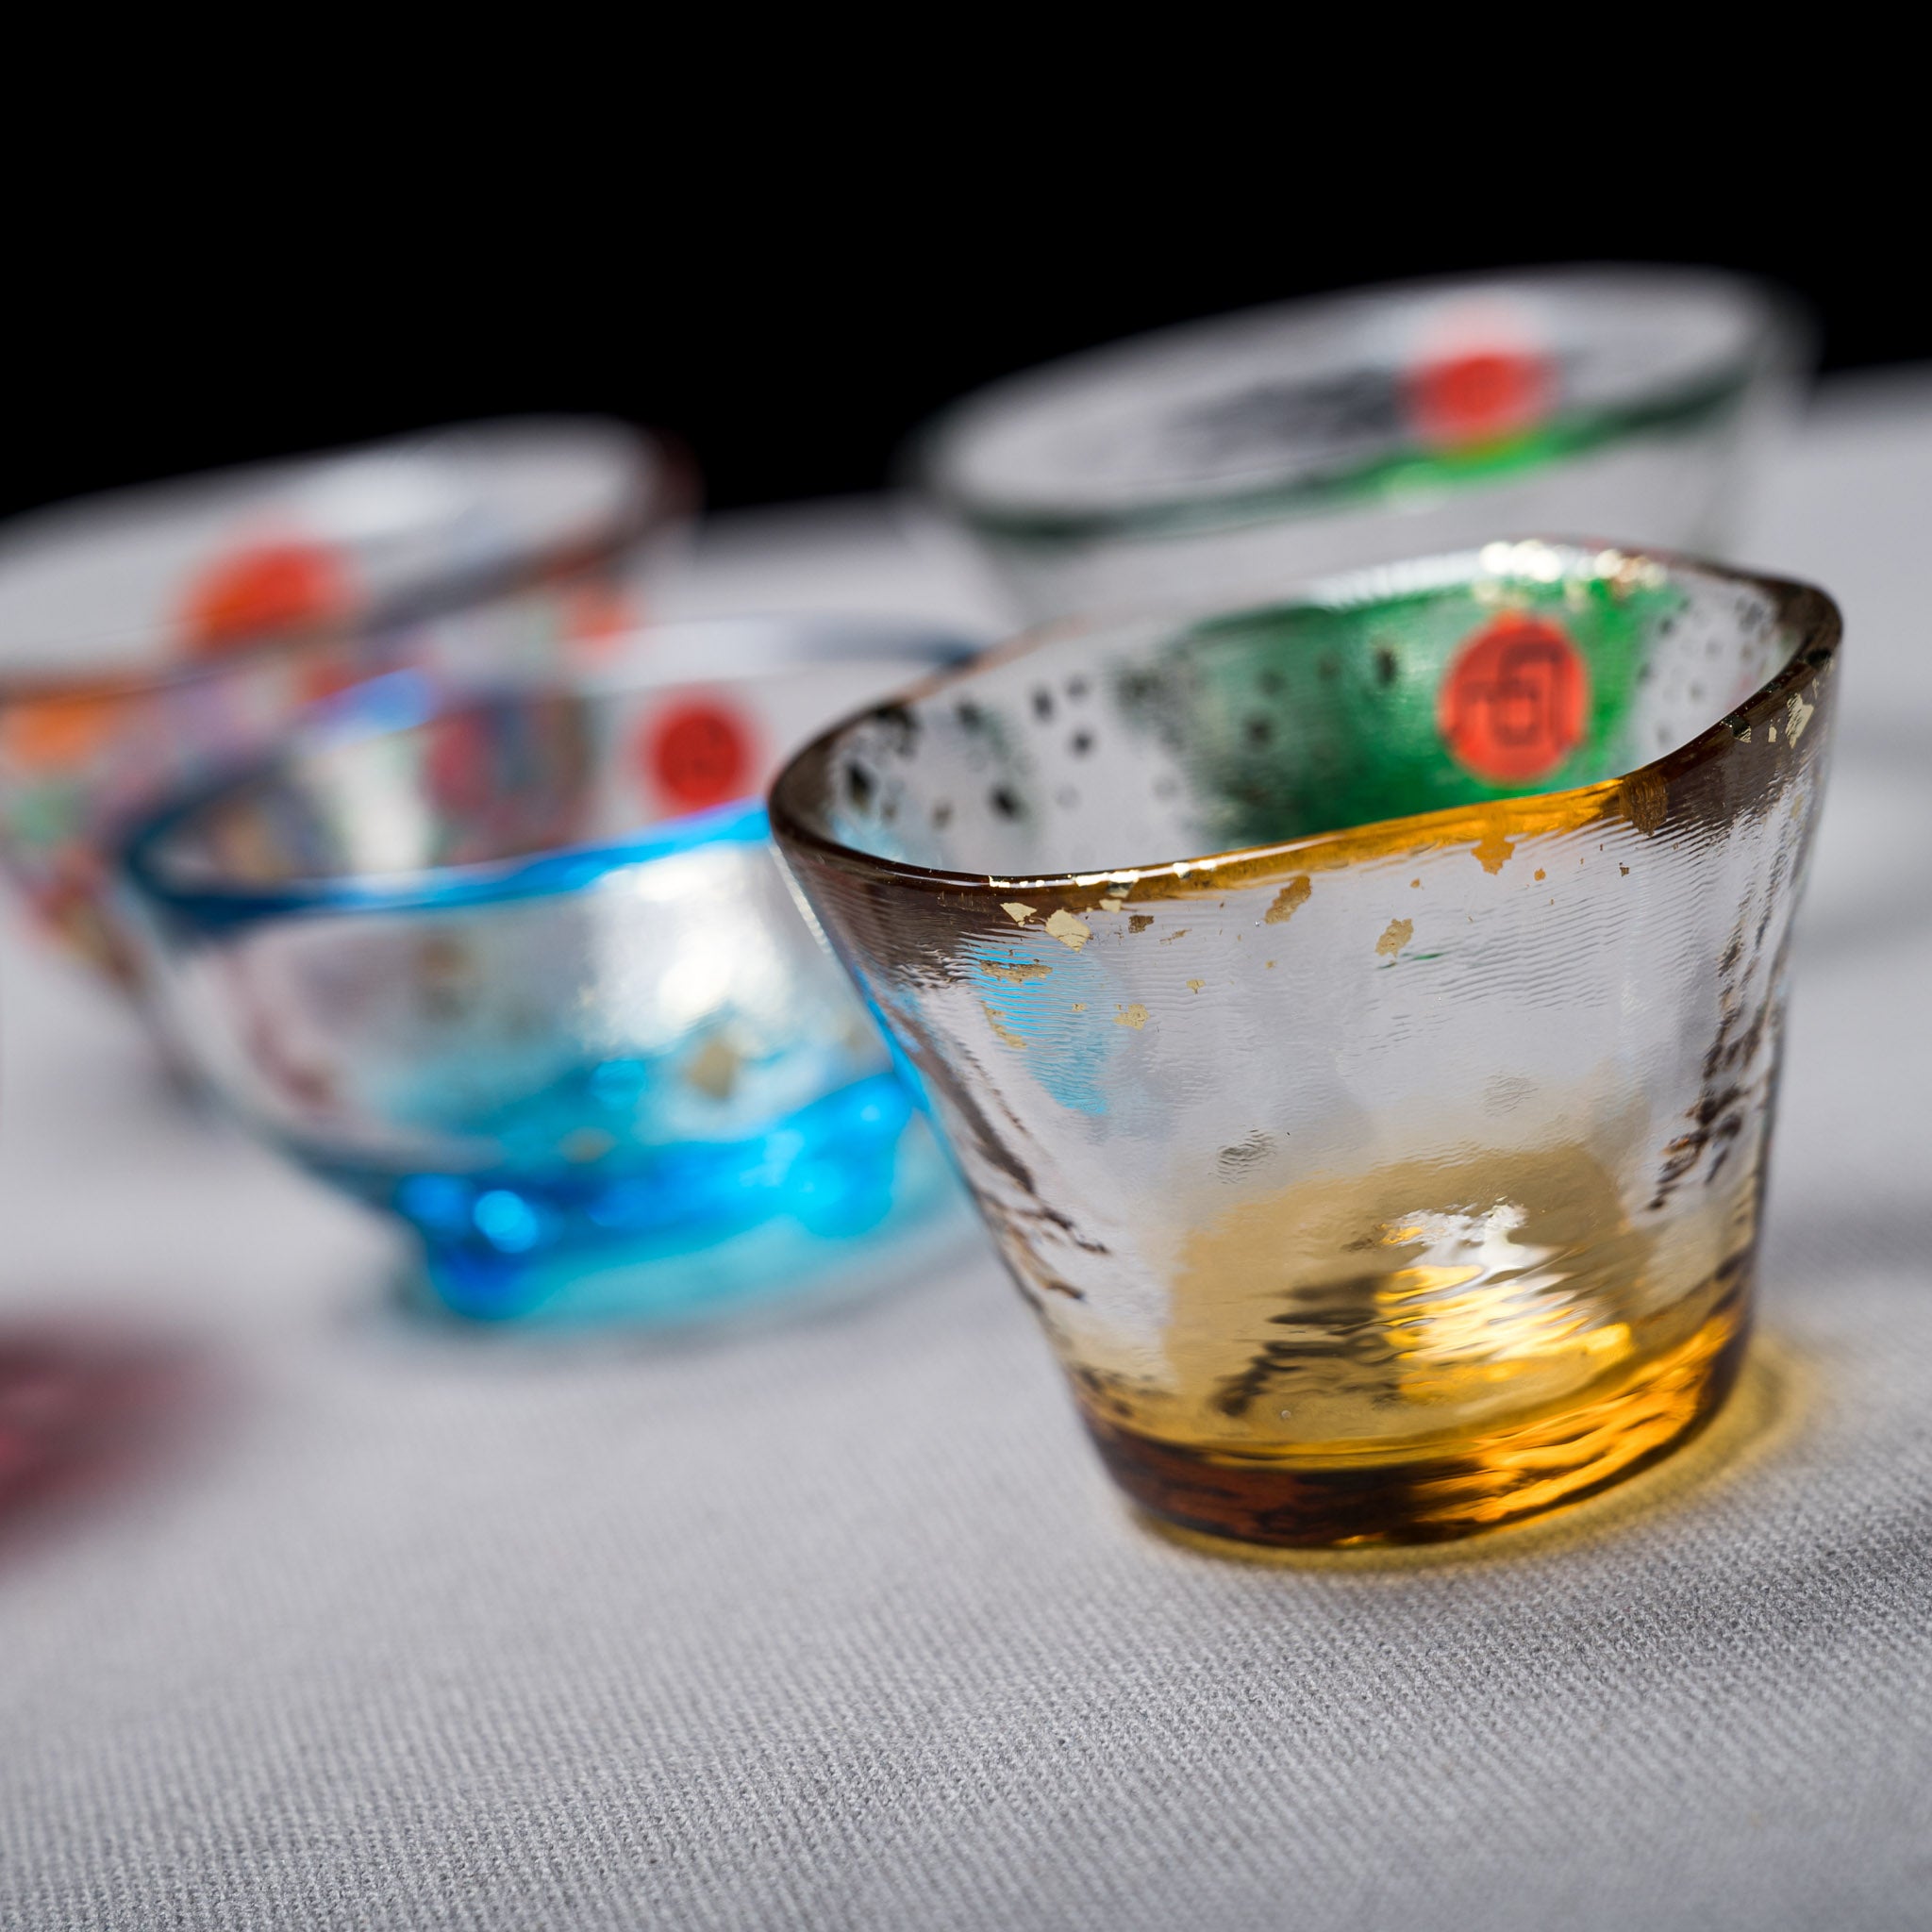 Assort Sake Glass - Set of 5 / 津軽びいどろ 酒器セット